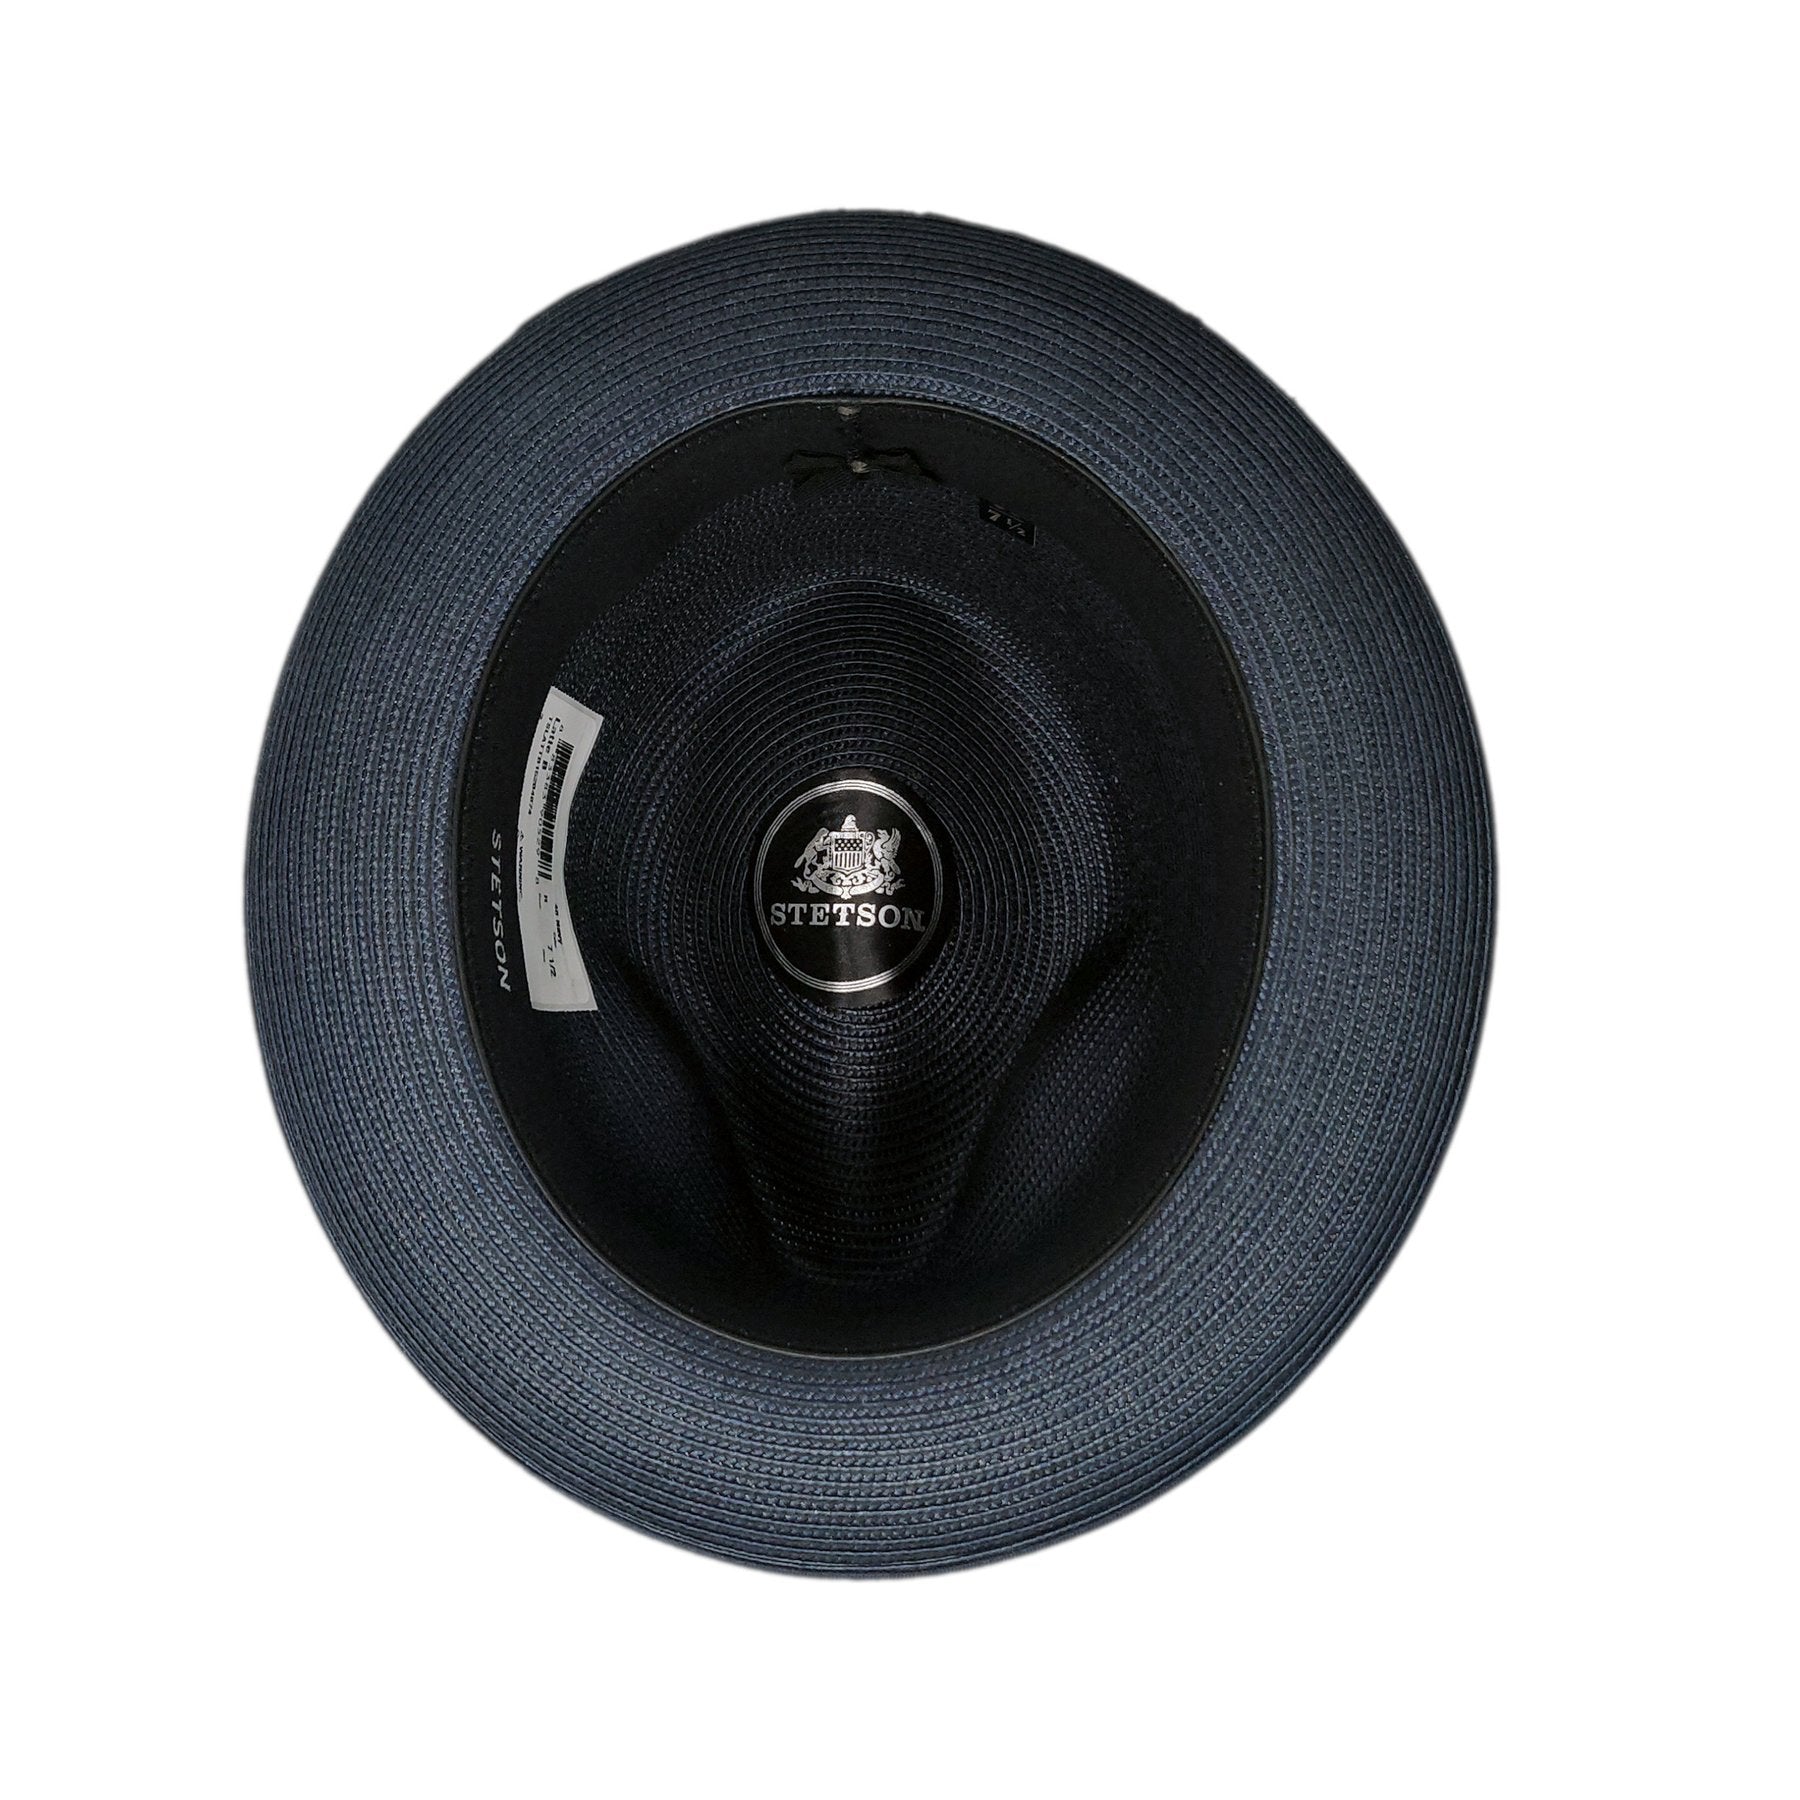 Latte B Black Hat